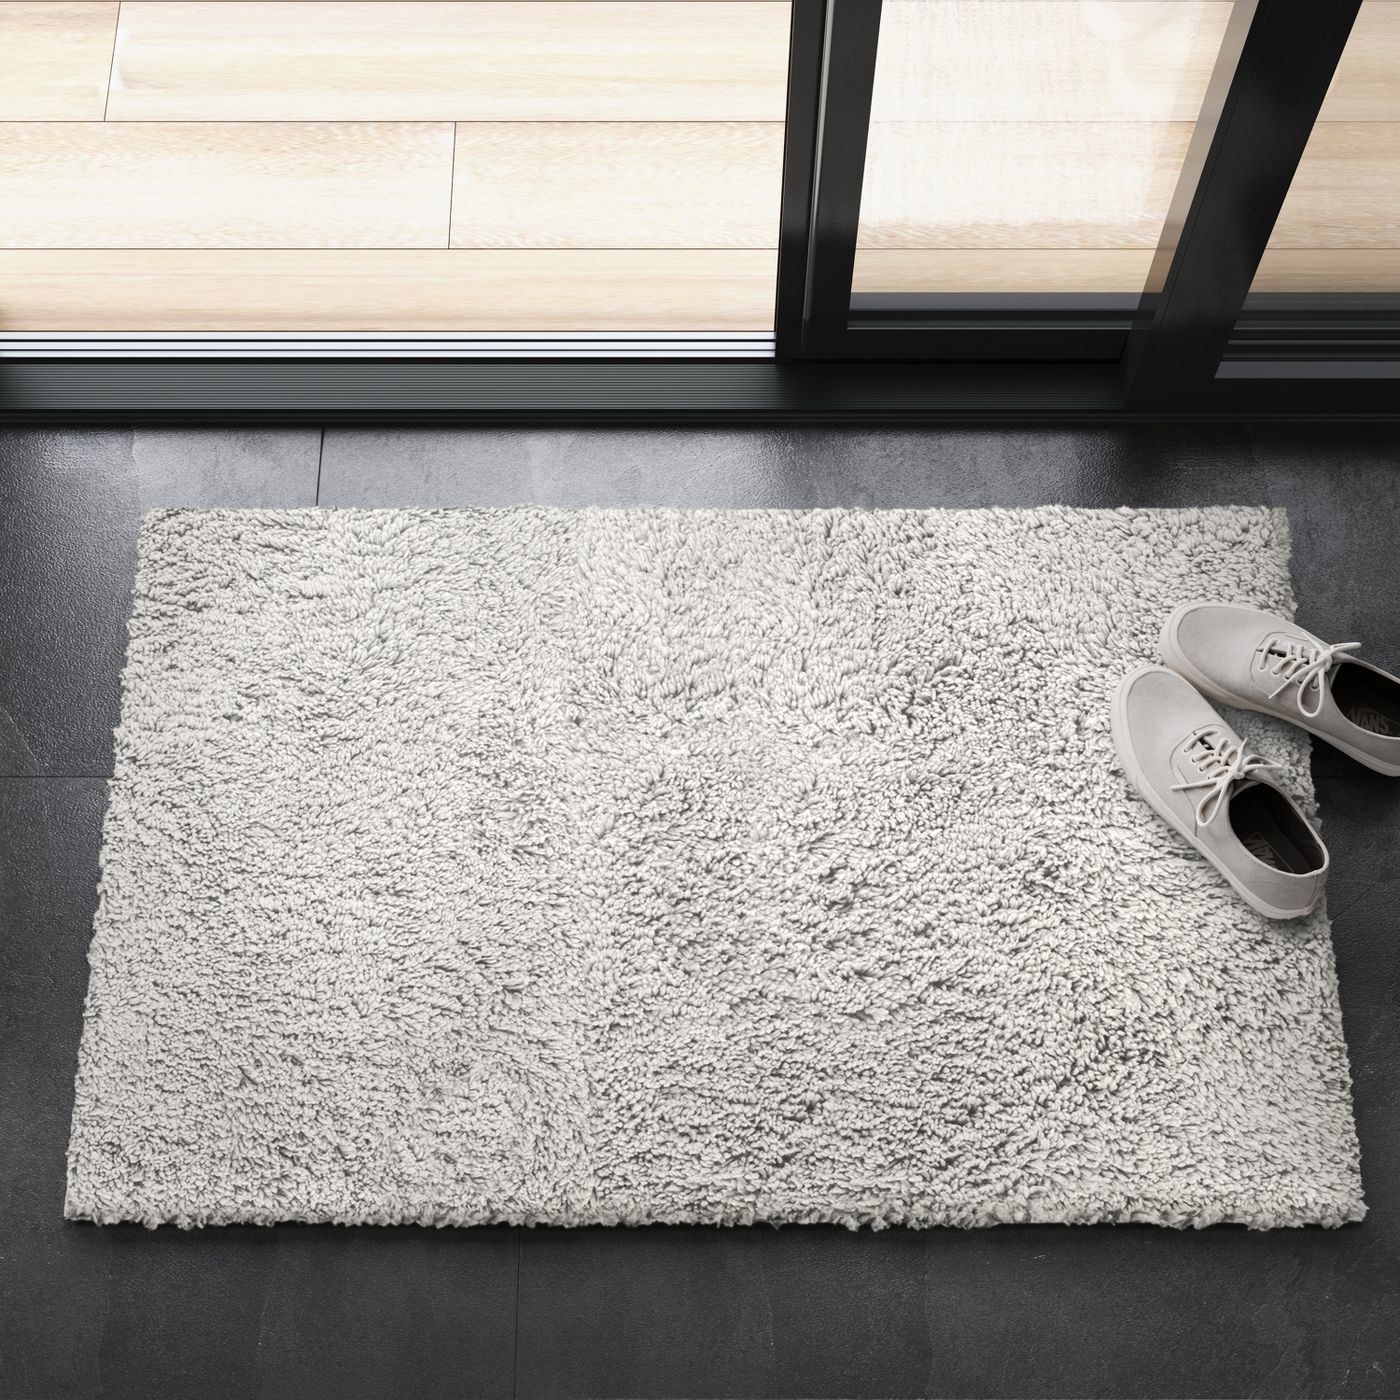 A white rug on a wood floor